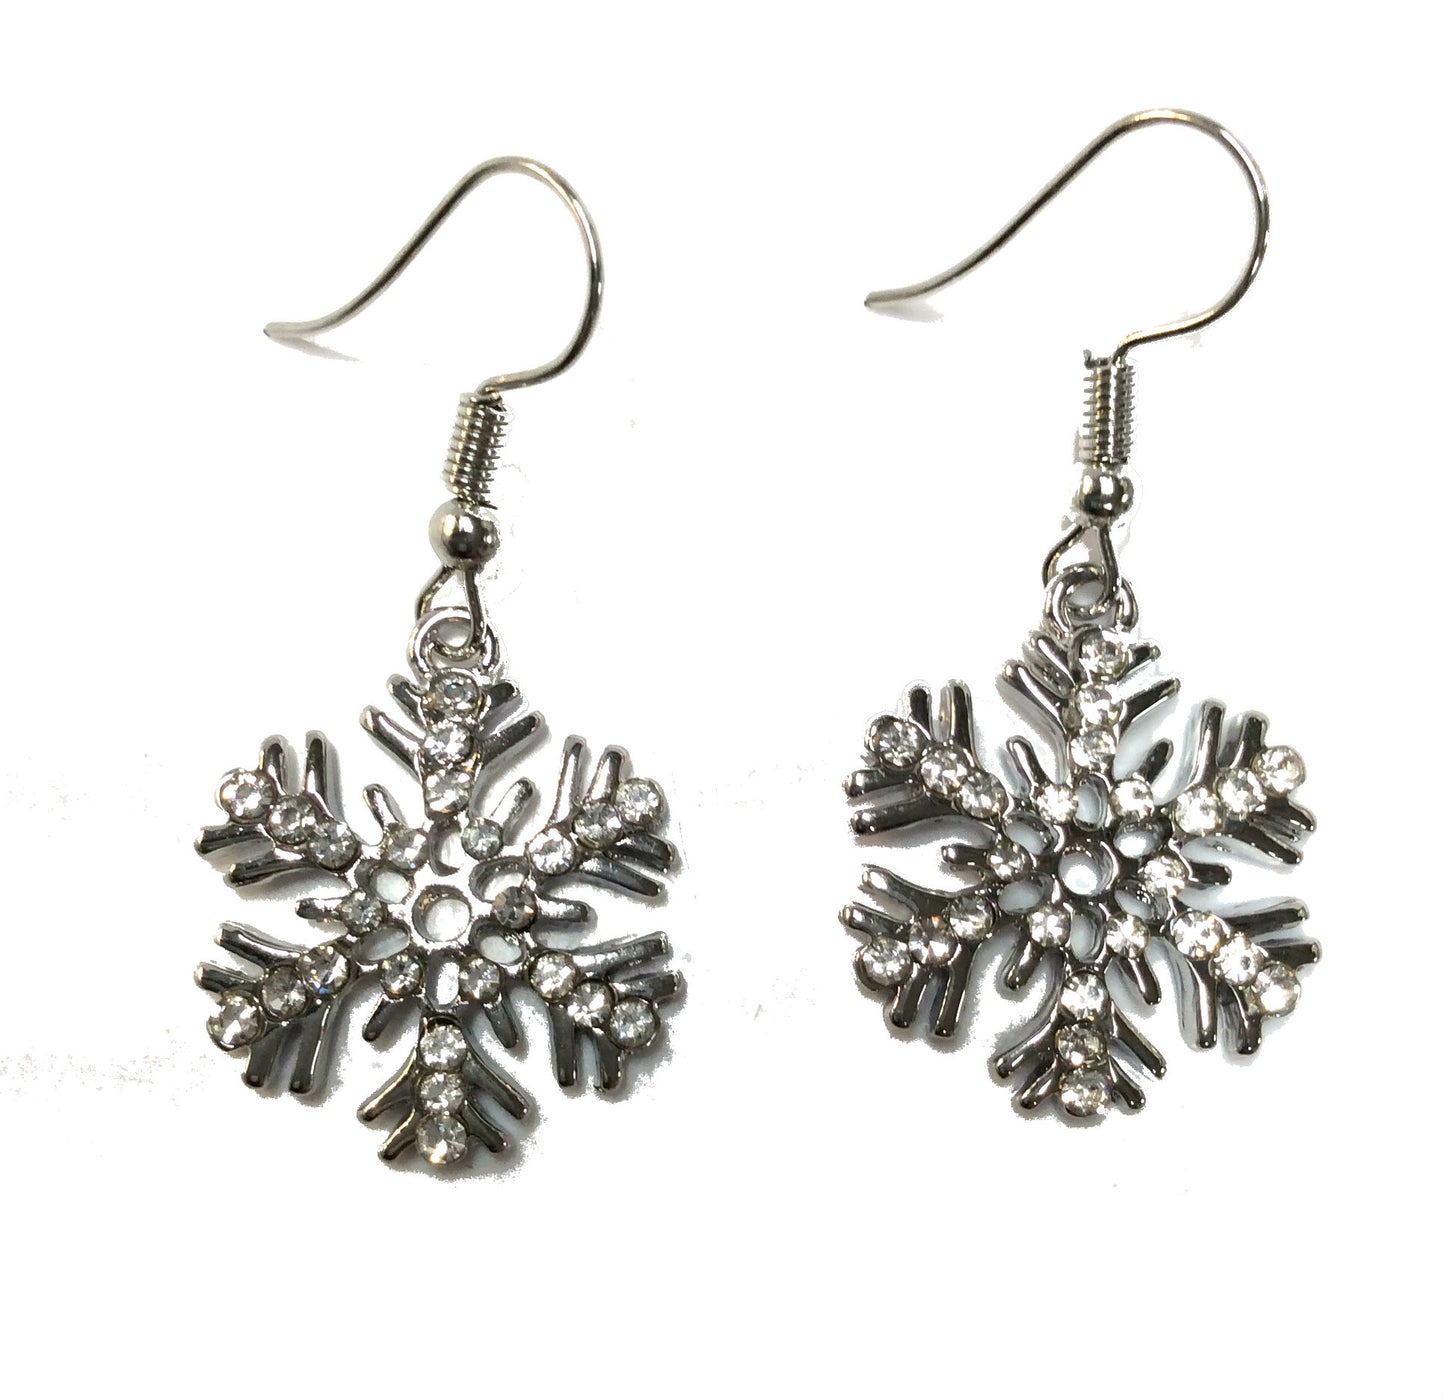 Snowflake earring #38-6416S